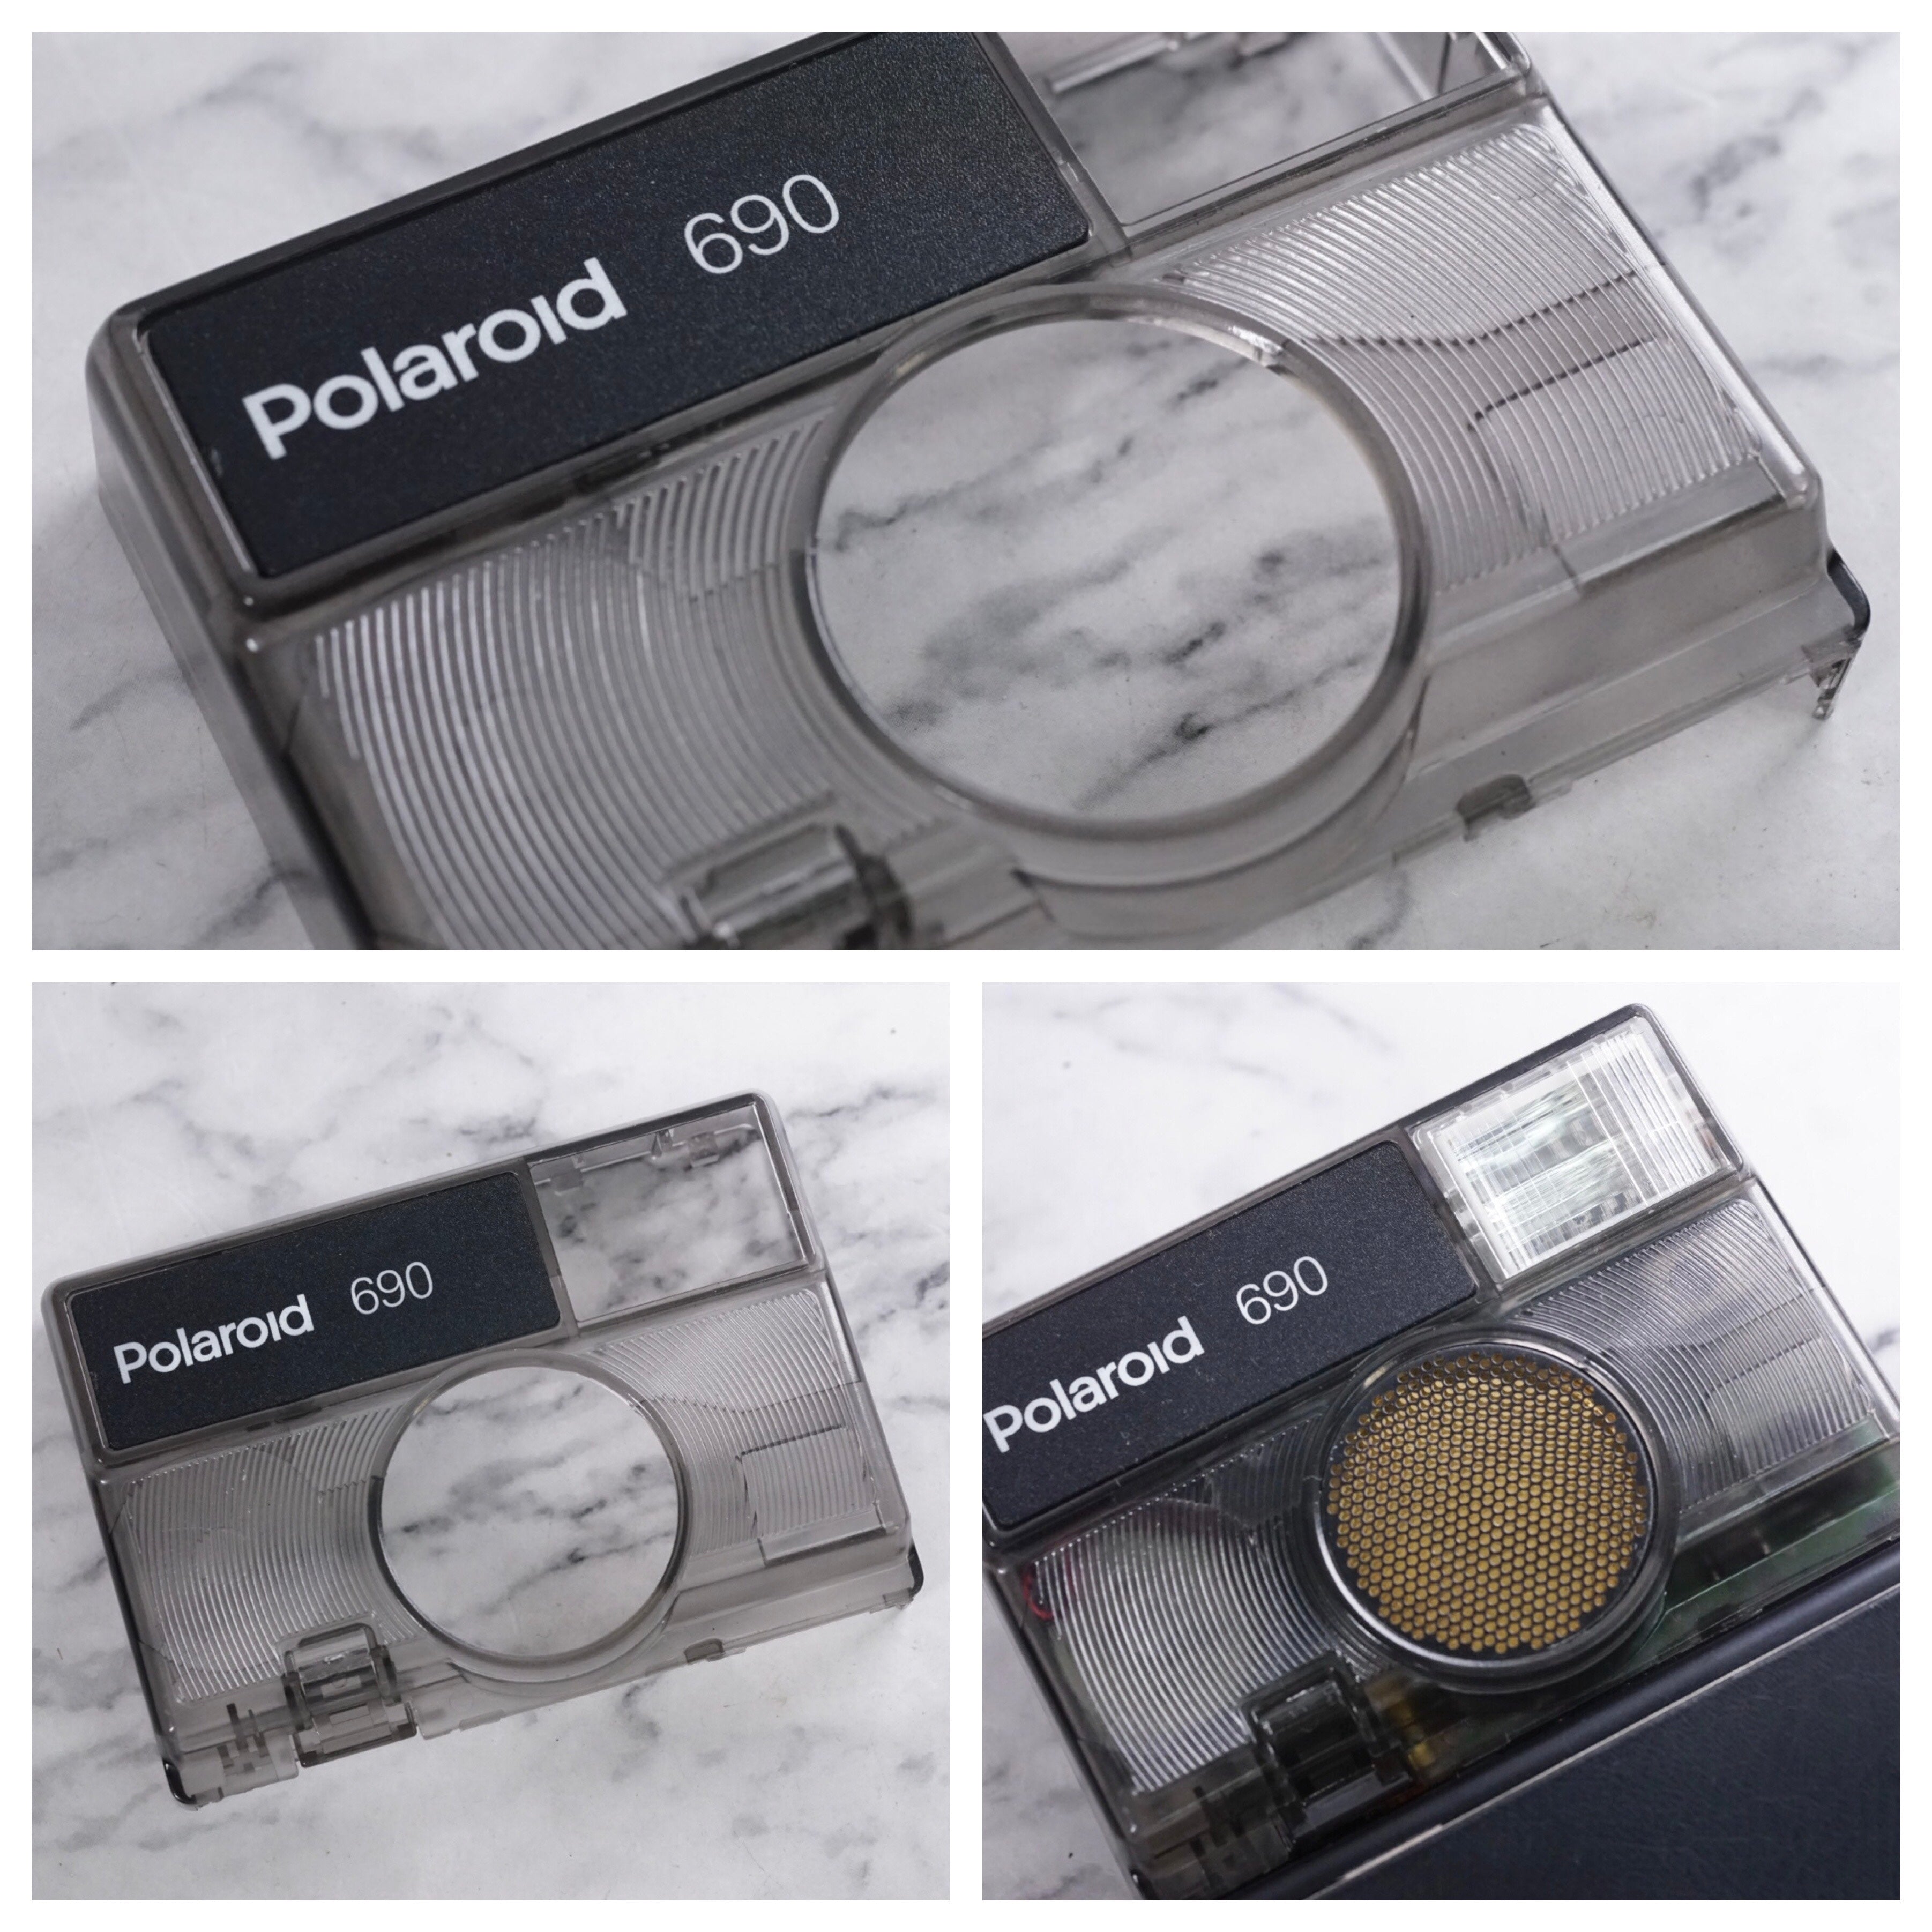 Polaroid Camera transparent cover 680/690 colorful – PolaStudio